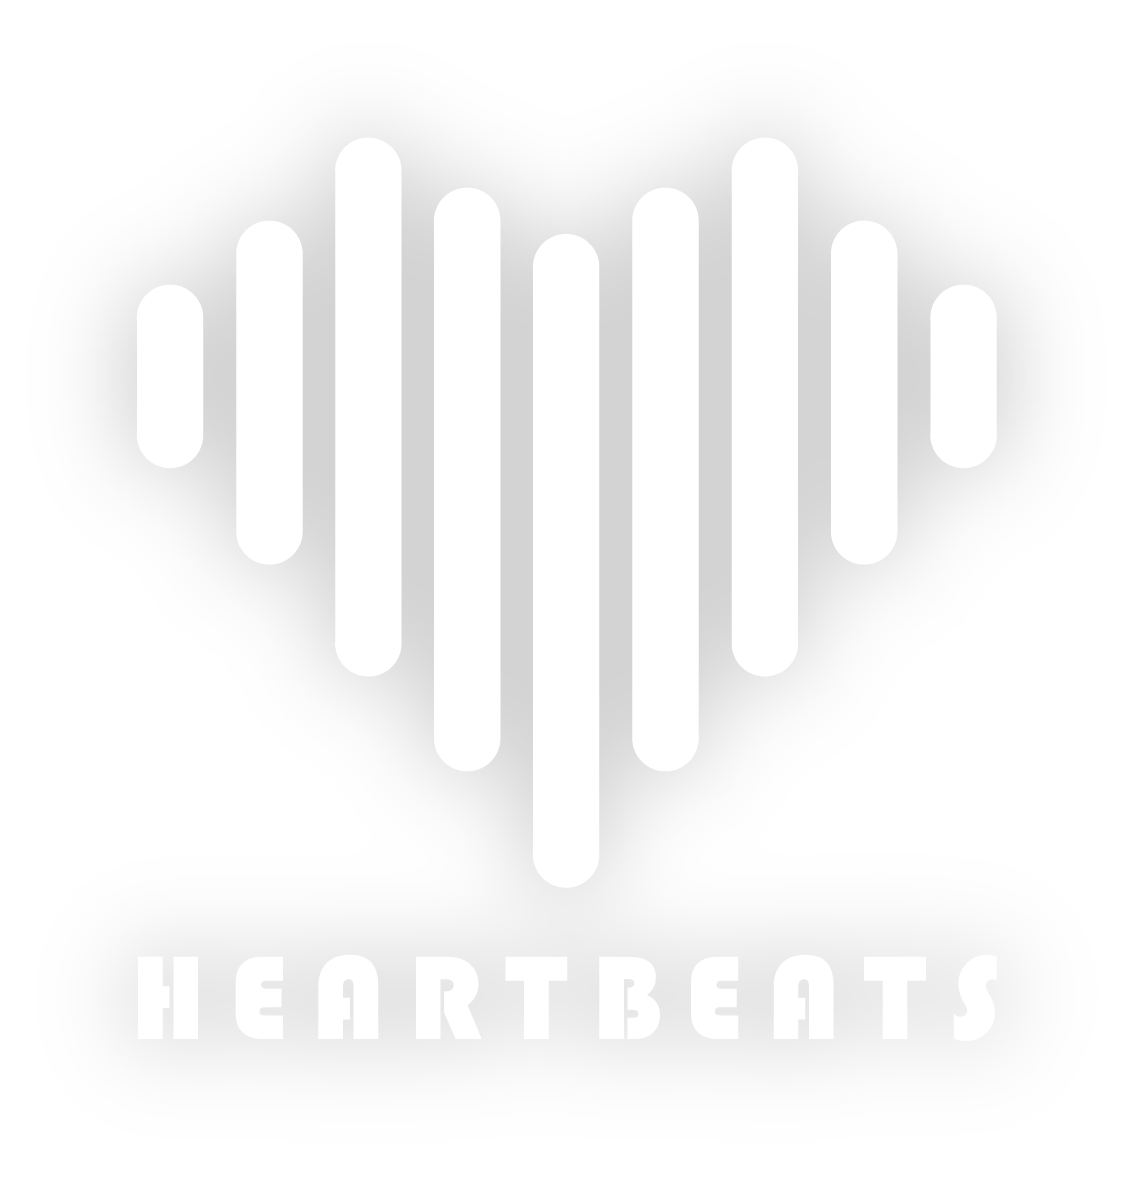 HeartBeats